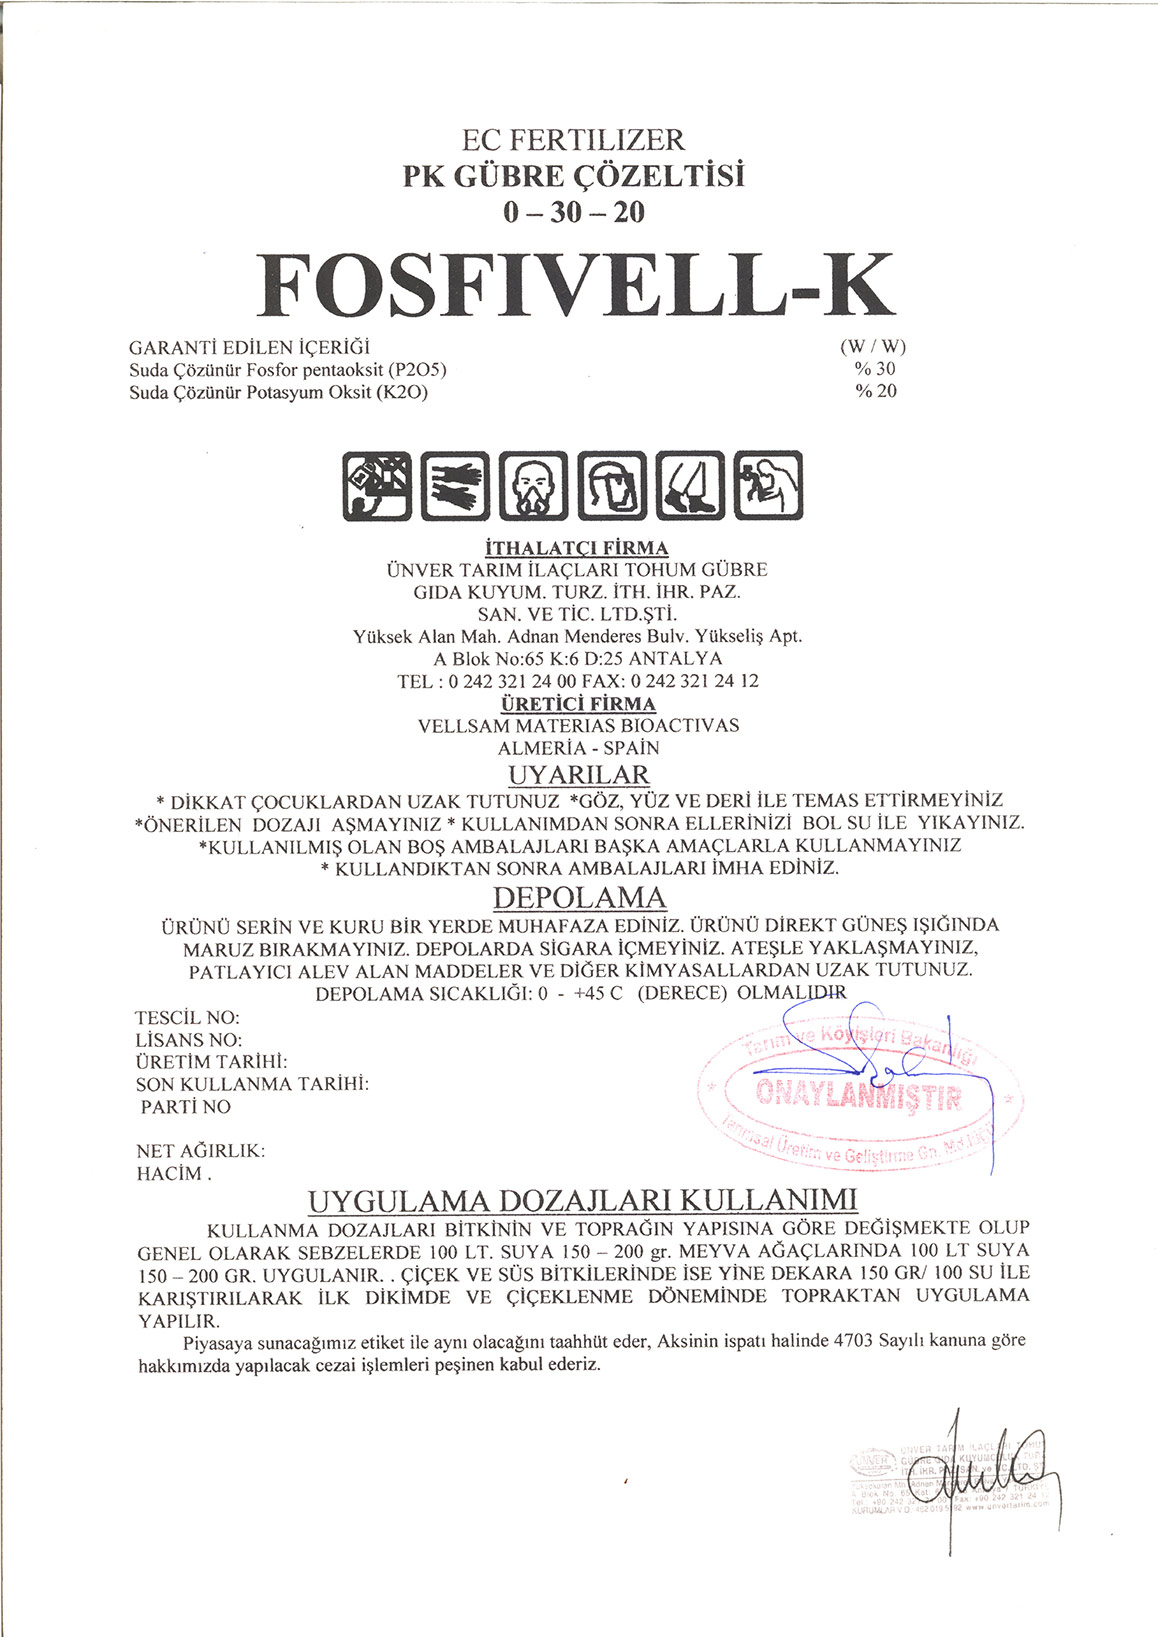 FOSFVELL-K